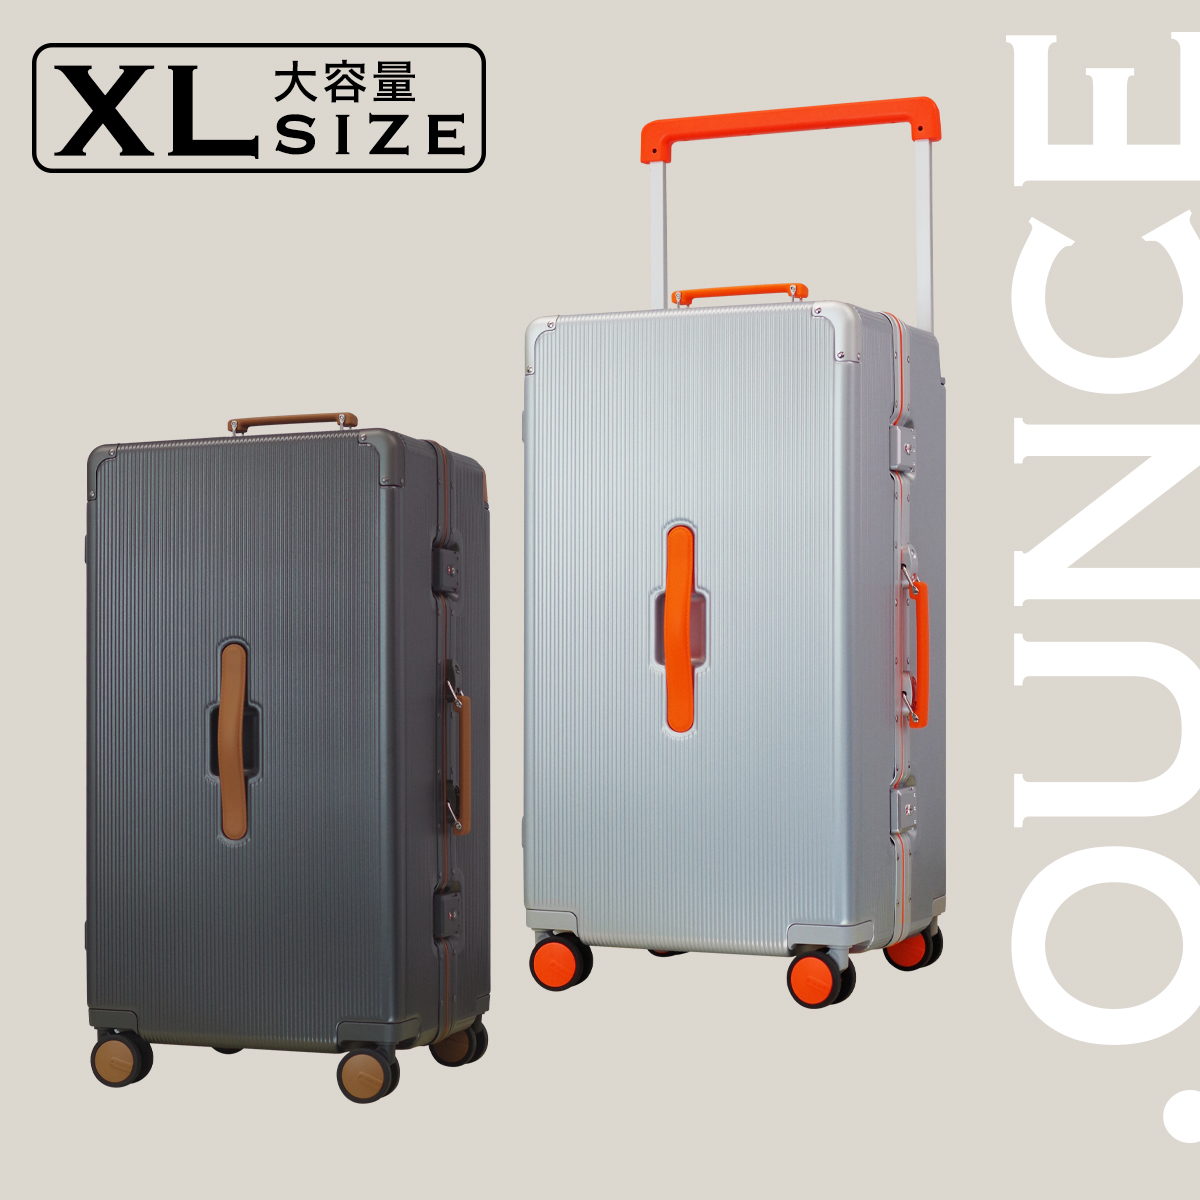 STYLISHJAPAN 公式】多機能 スーツケース アルミフレーム 機内持ち込み 